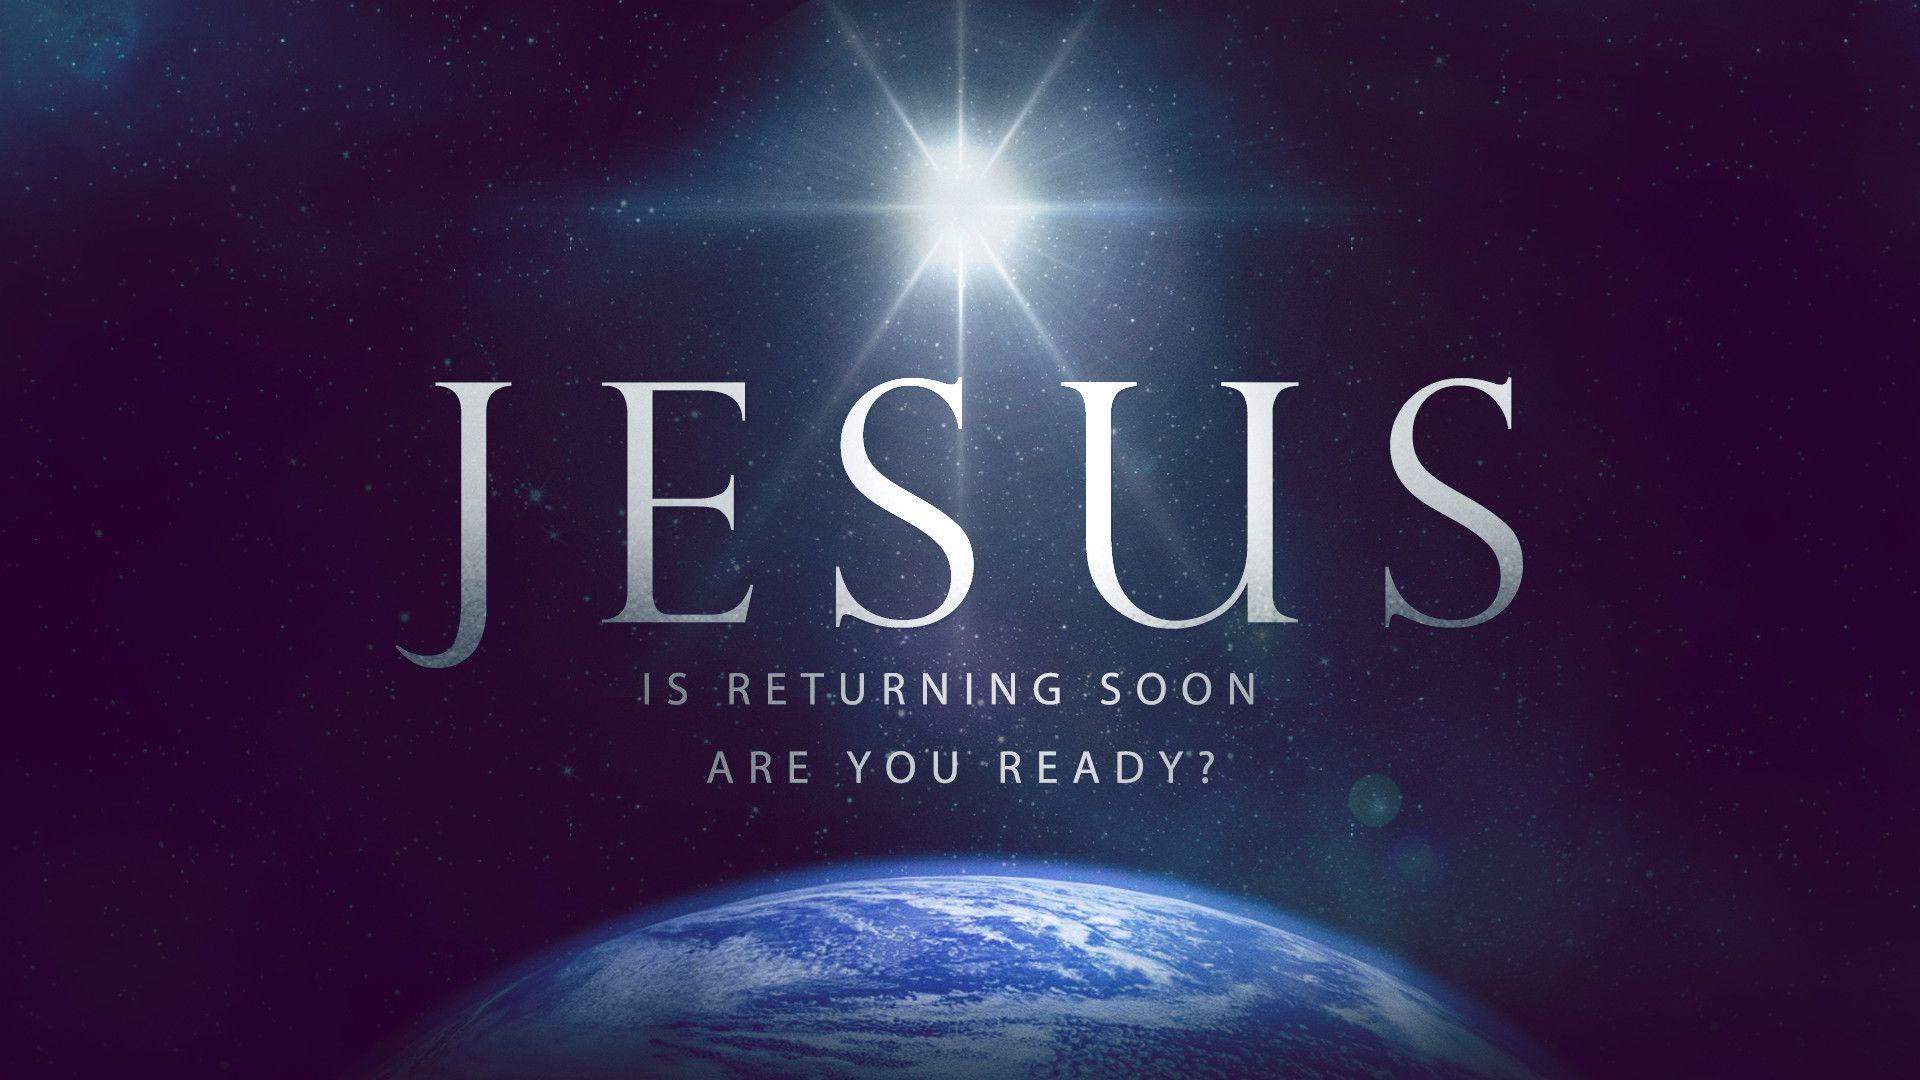 jesus coming soon photo sharing